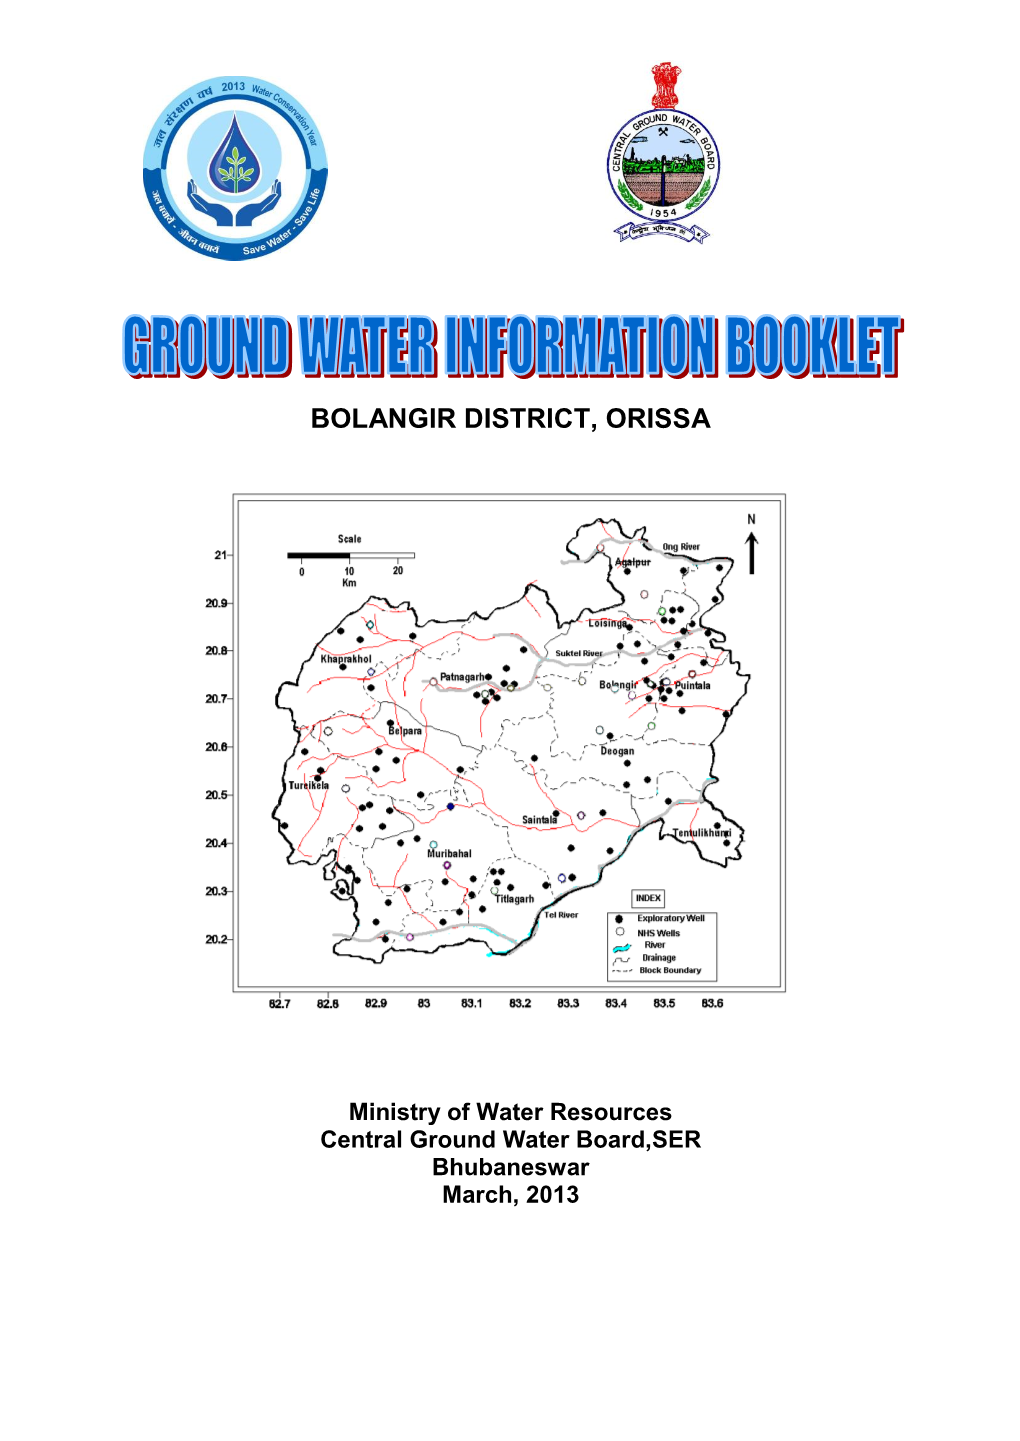 Groundwater Brochure of Bolangir District, Orissa